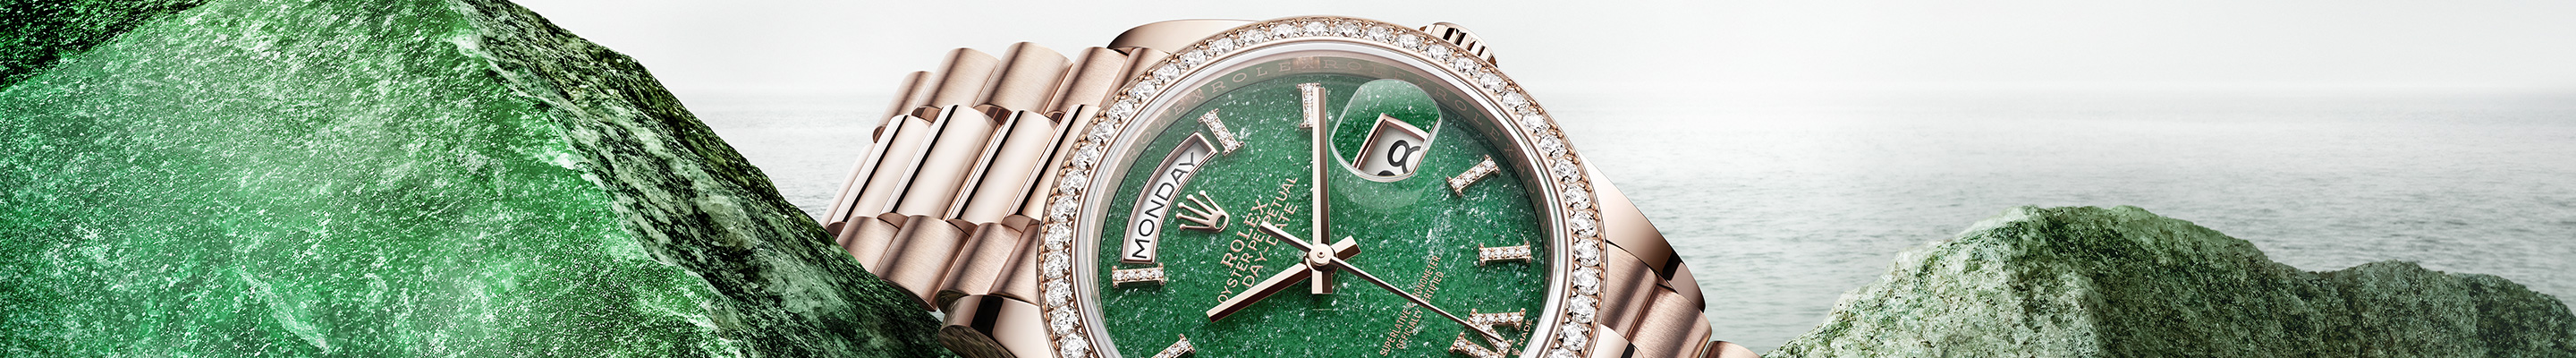 Rolex Watches in Dallas, Fort Worth Korman Fine Jewelry